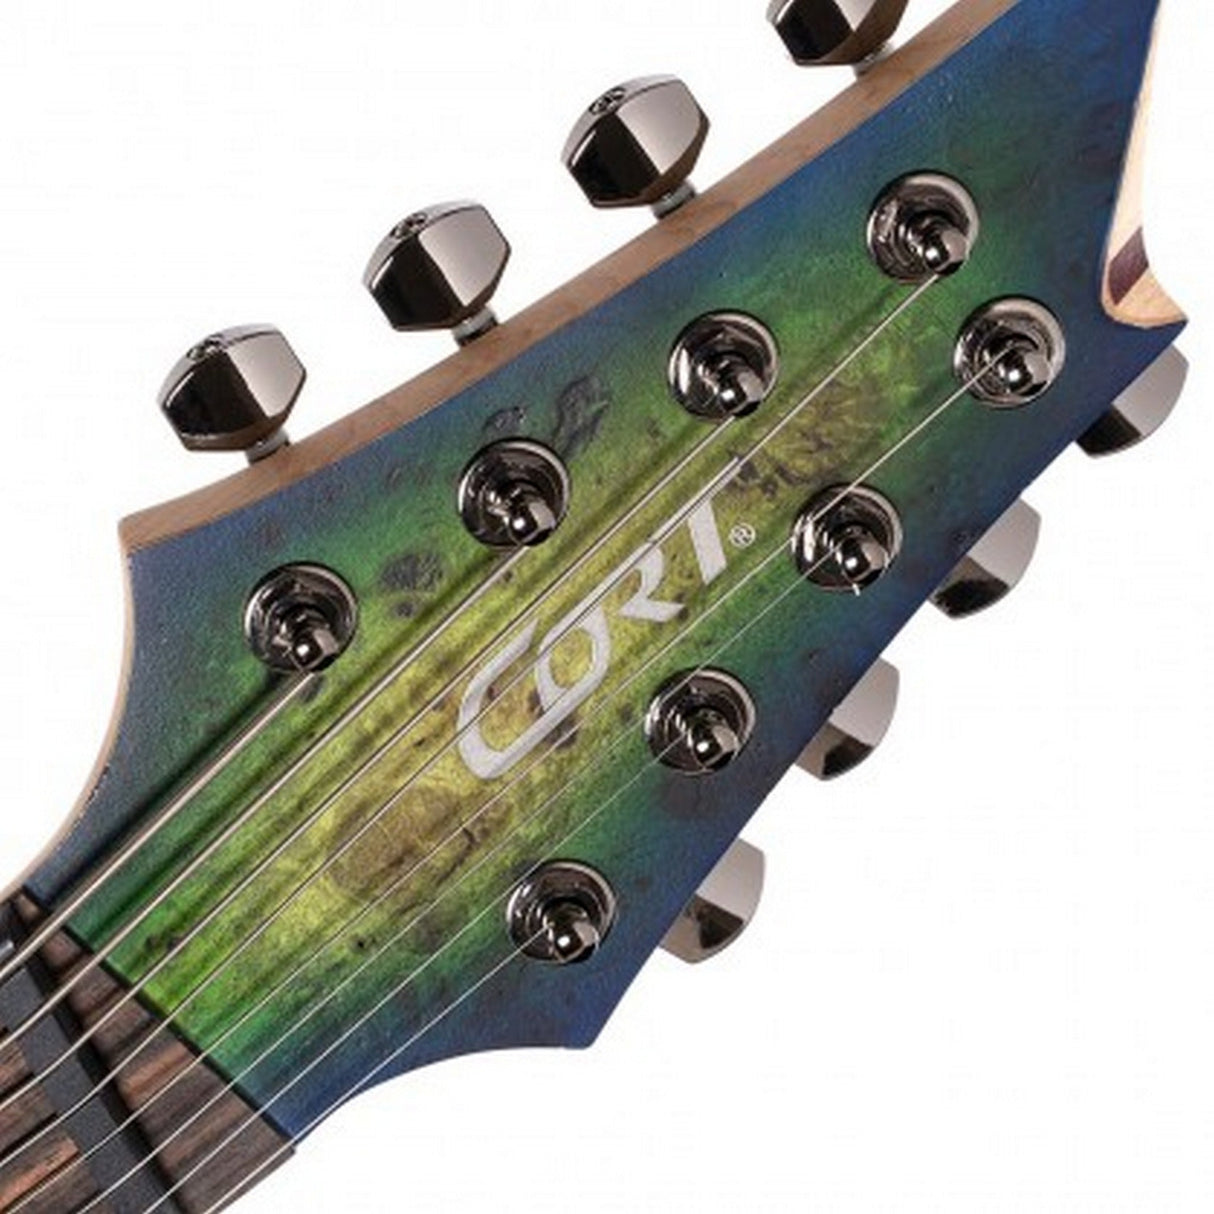 Cort KX508 Multi-Scale II 8-string Guitar, Mariana Blue Burst